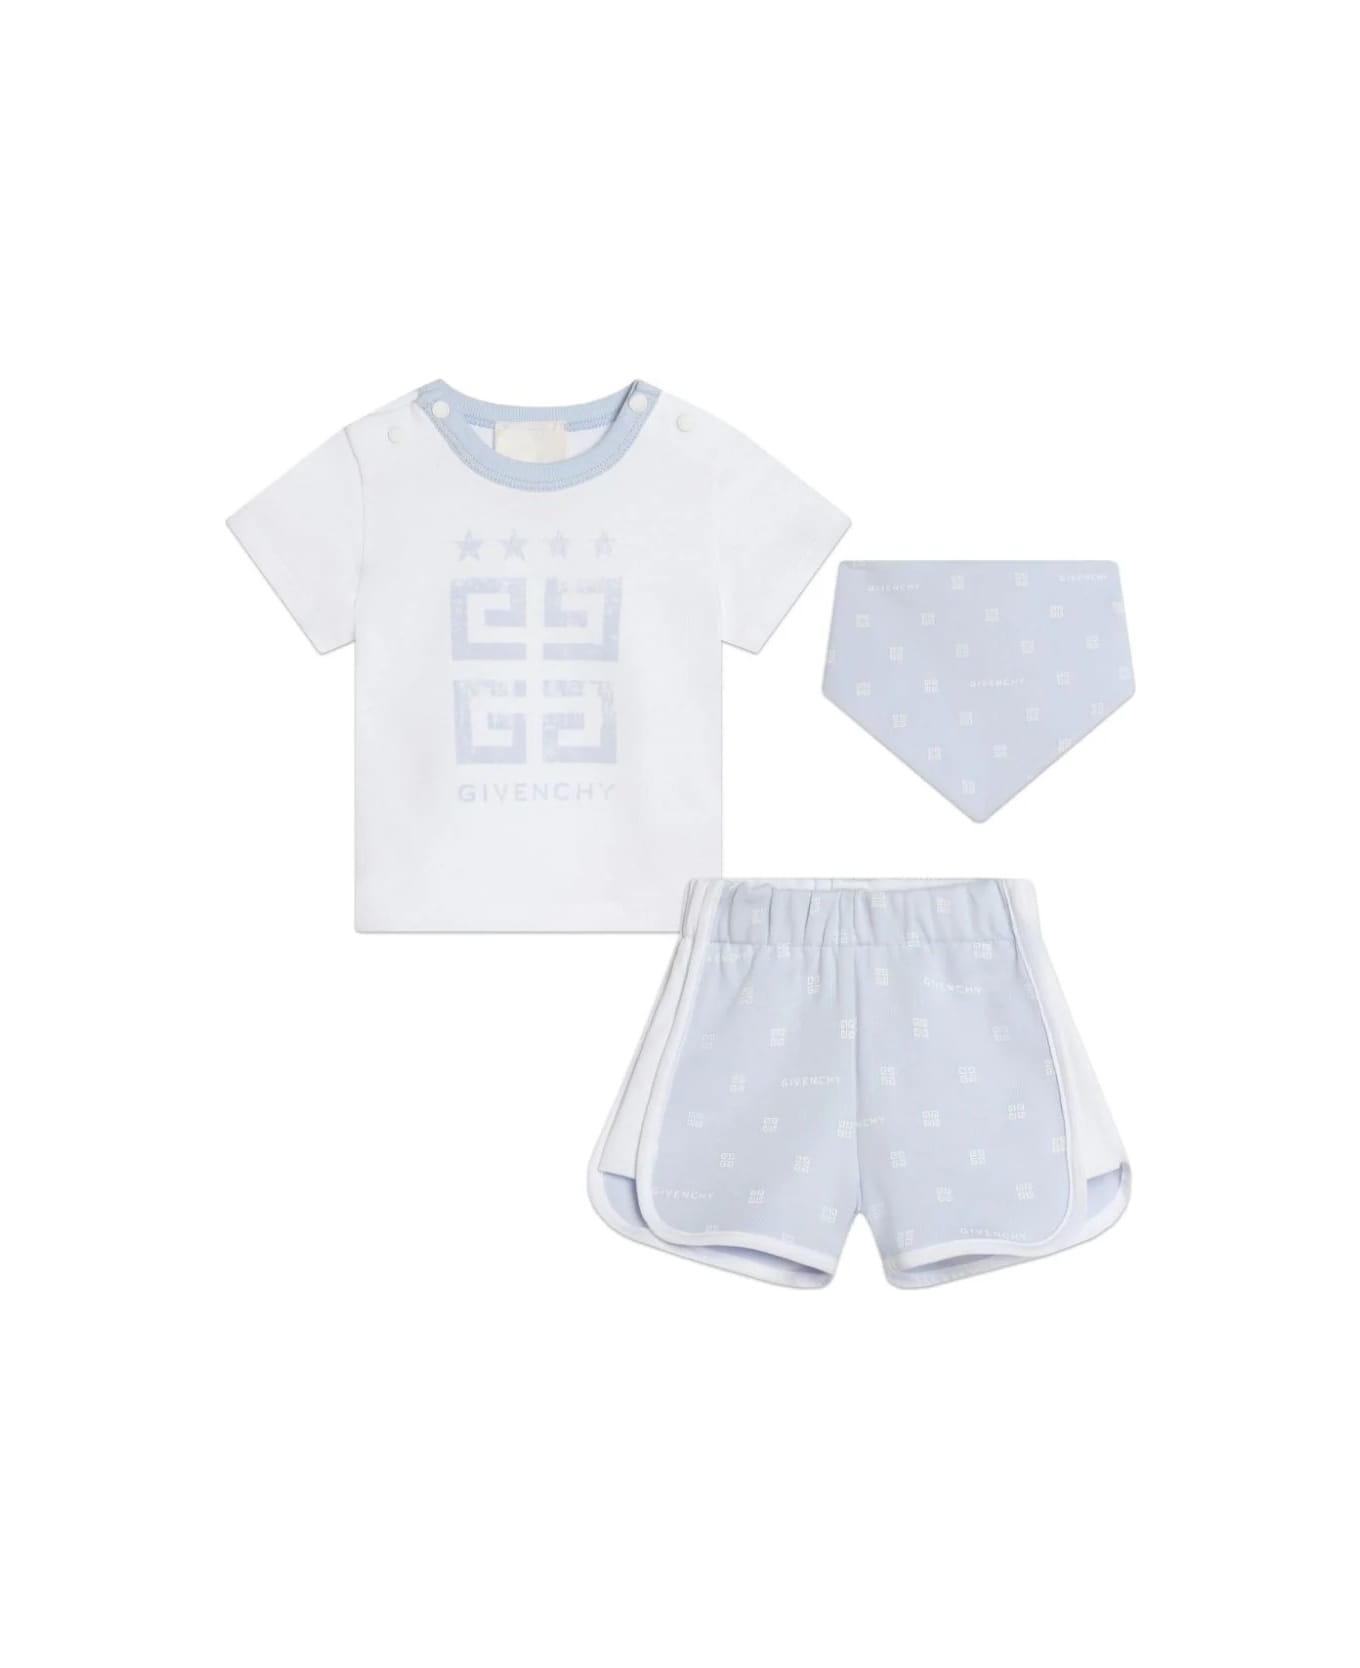 Givenchy White And Light Blue Set With T-shirt, Shorts And Bandana - Blue